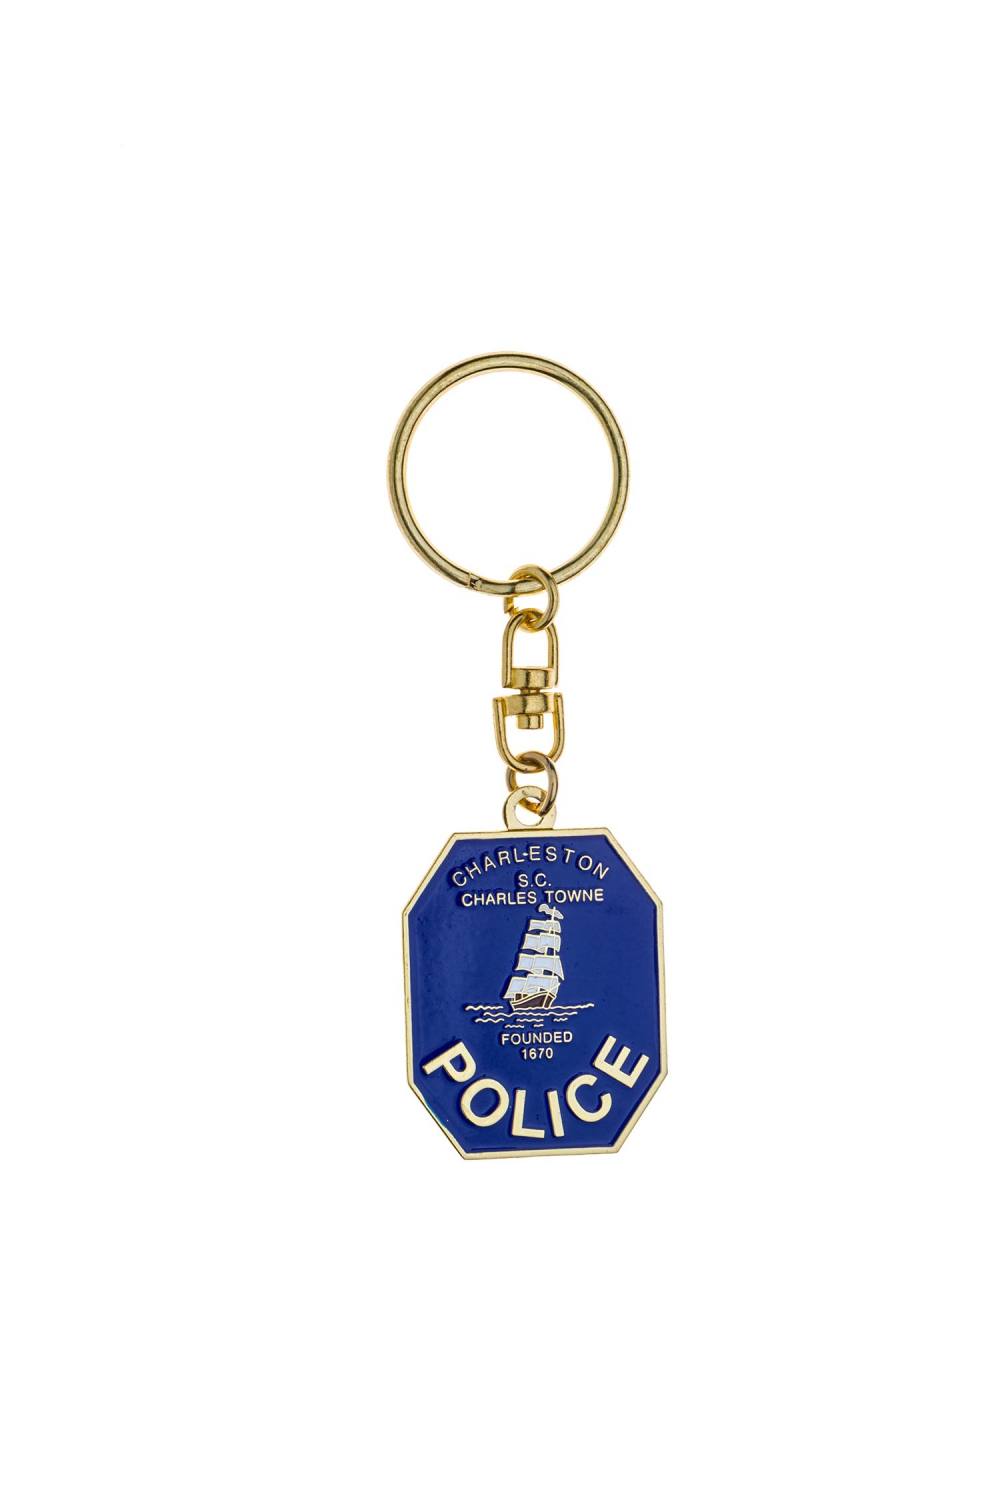 Custom metal police keychain